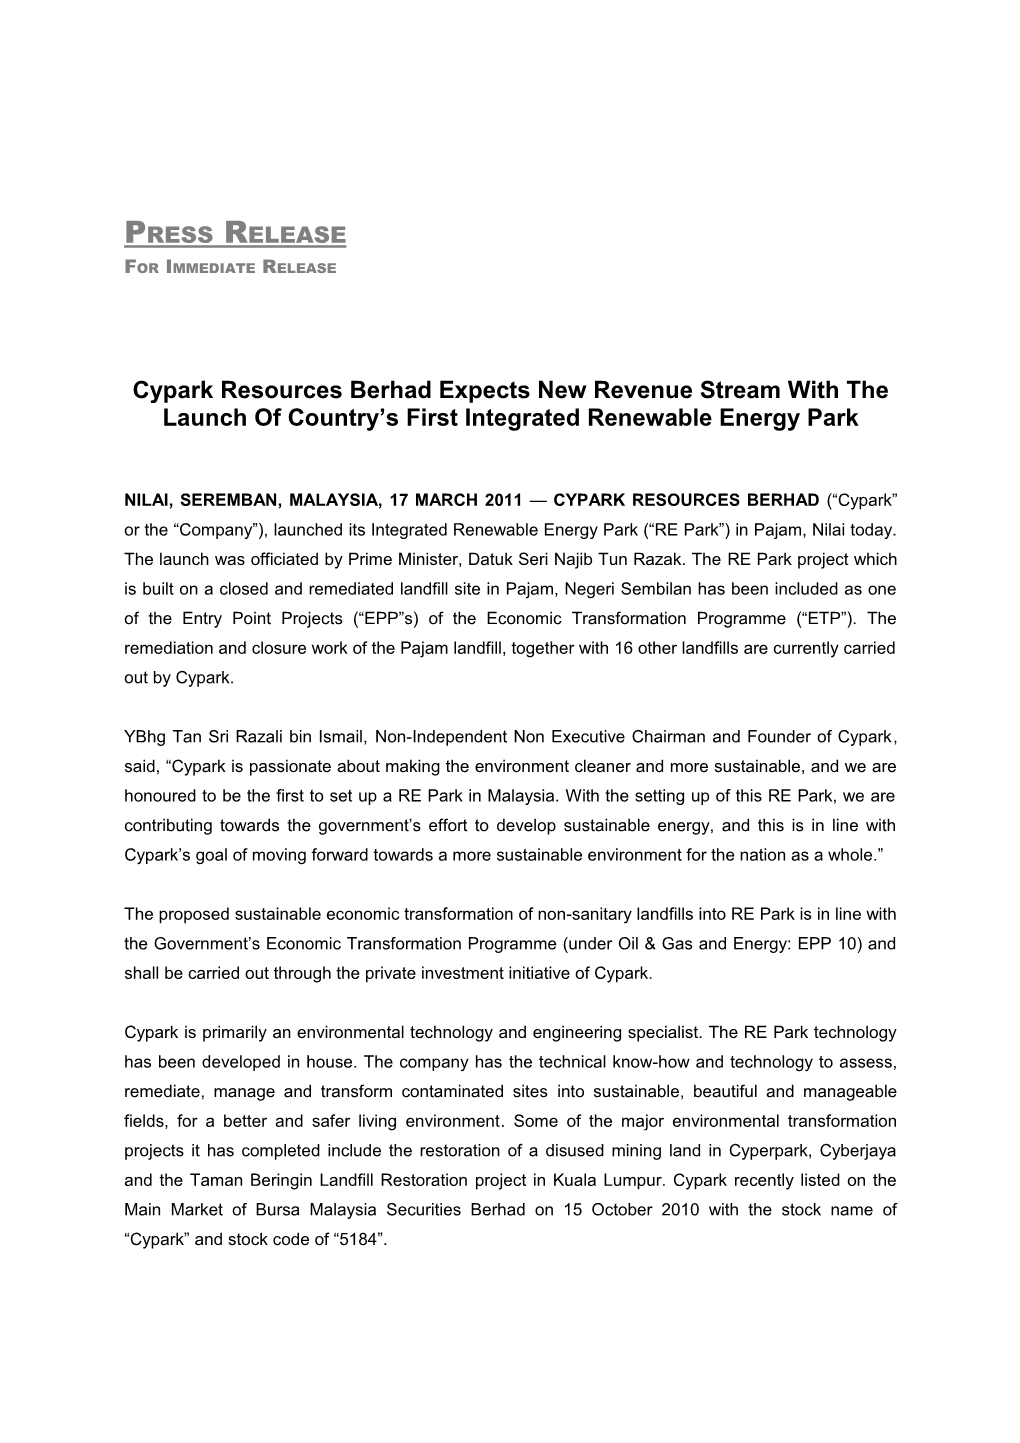 11-Mar08-Cypark-RE Park Launch-Press Release-Draft1